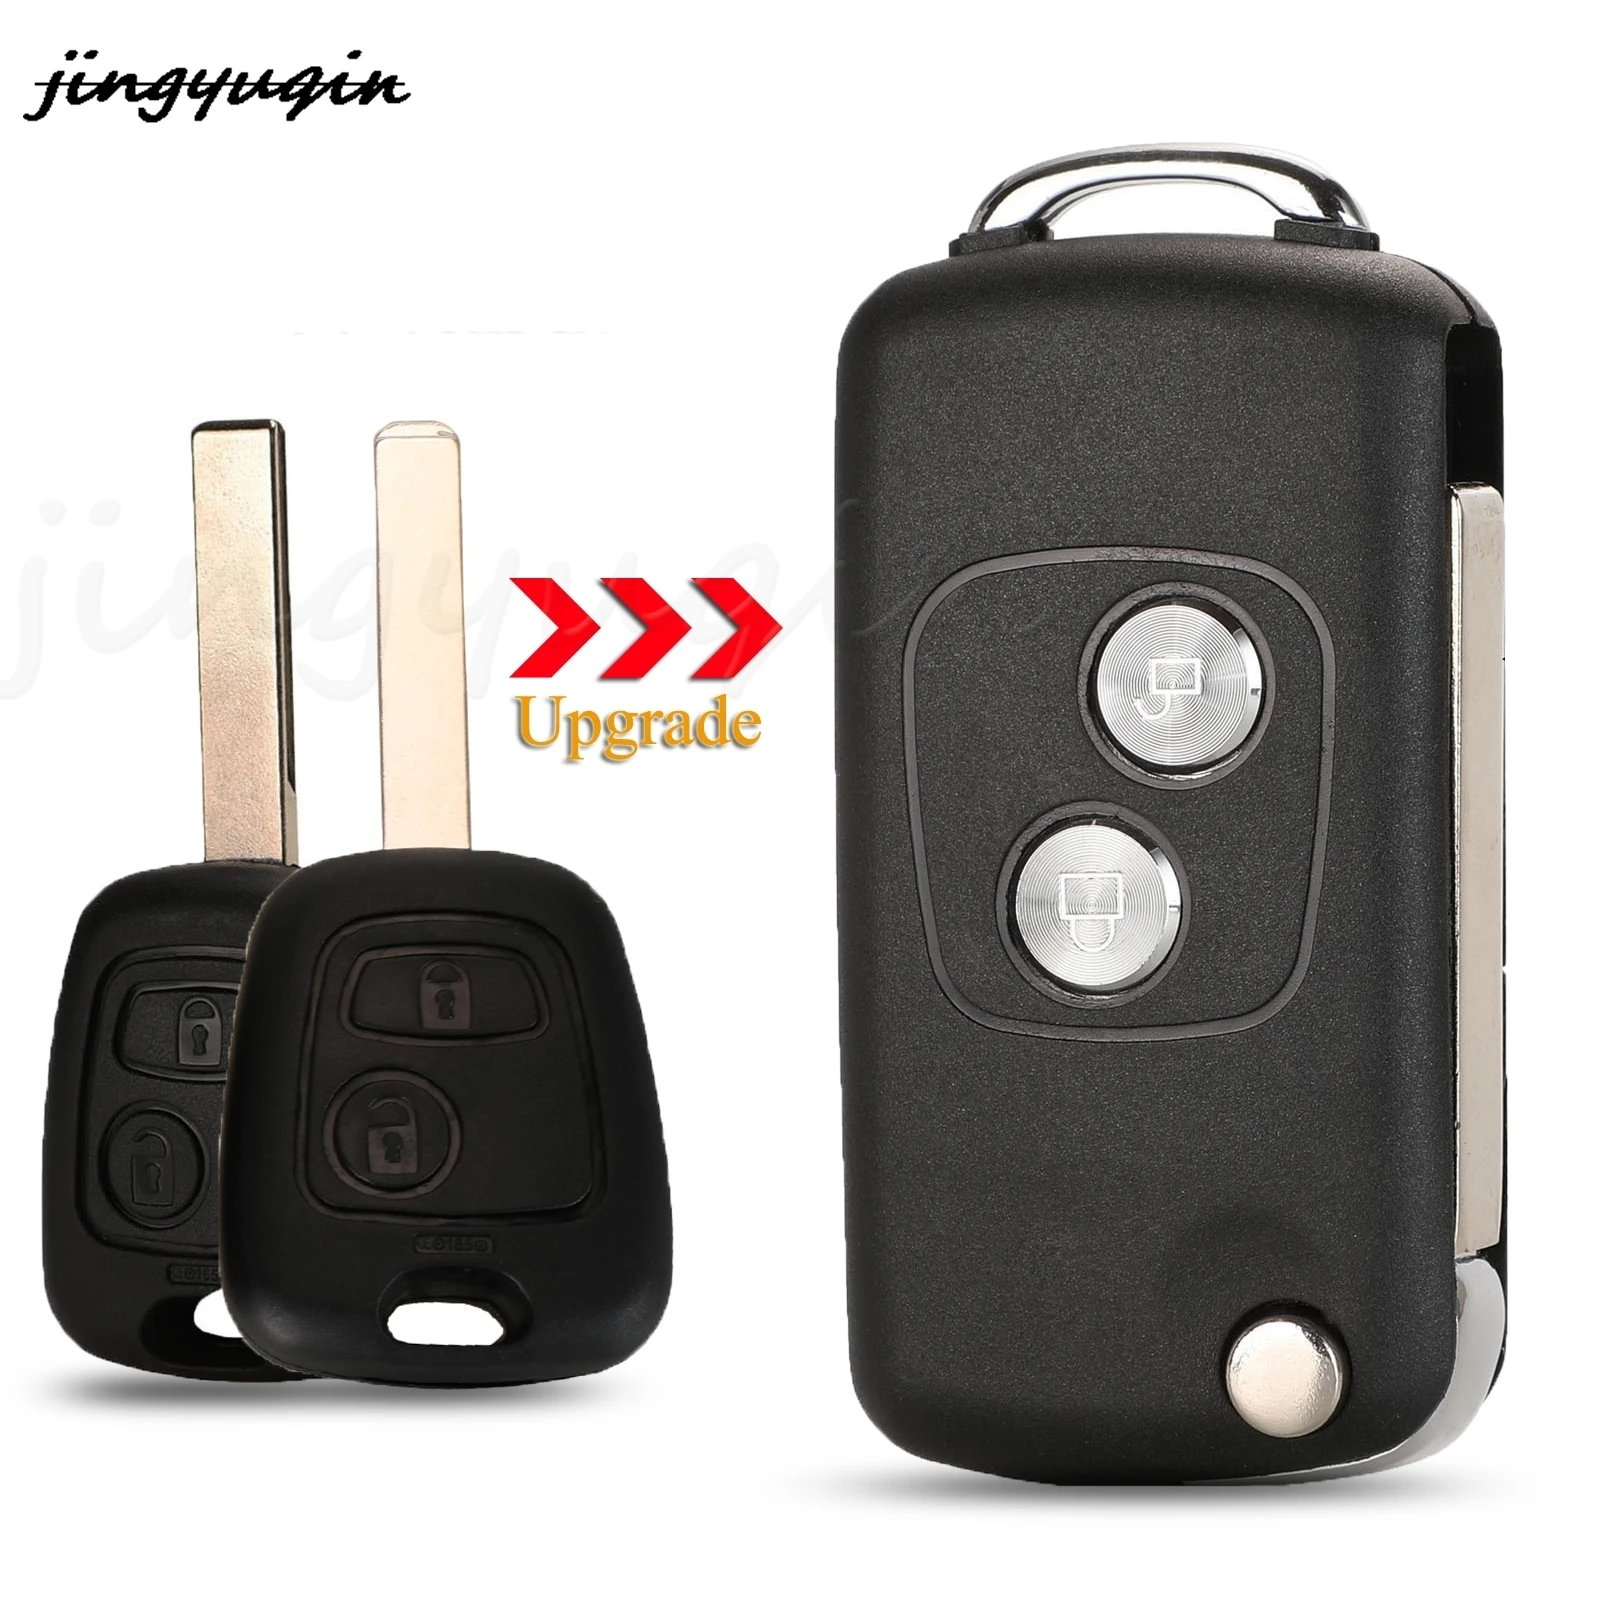 

jingyuqin 2 Buttons Modified Flip Remote Car key Shell For Citroen C1 C2 C3 C4 Picasso Xsara Peugeot 206 306 307 107 207 407